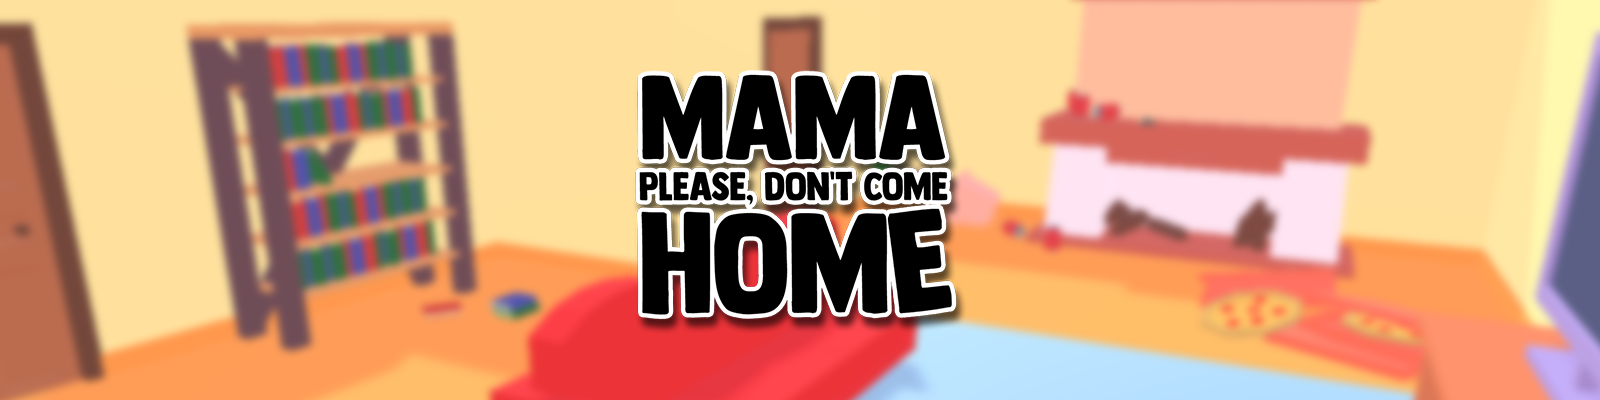 Mama please, dont come home